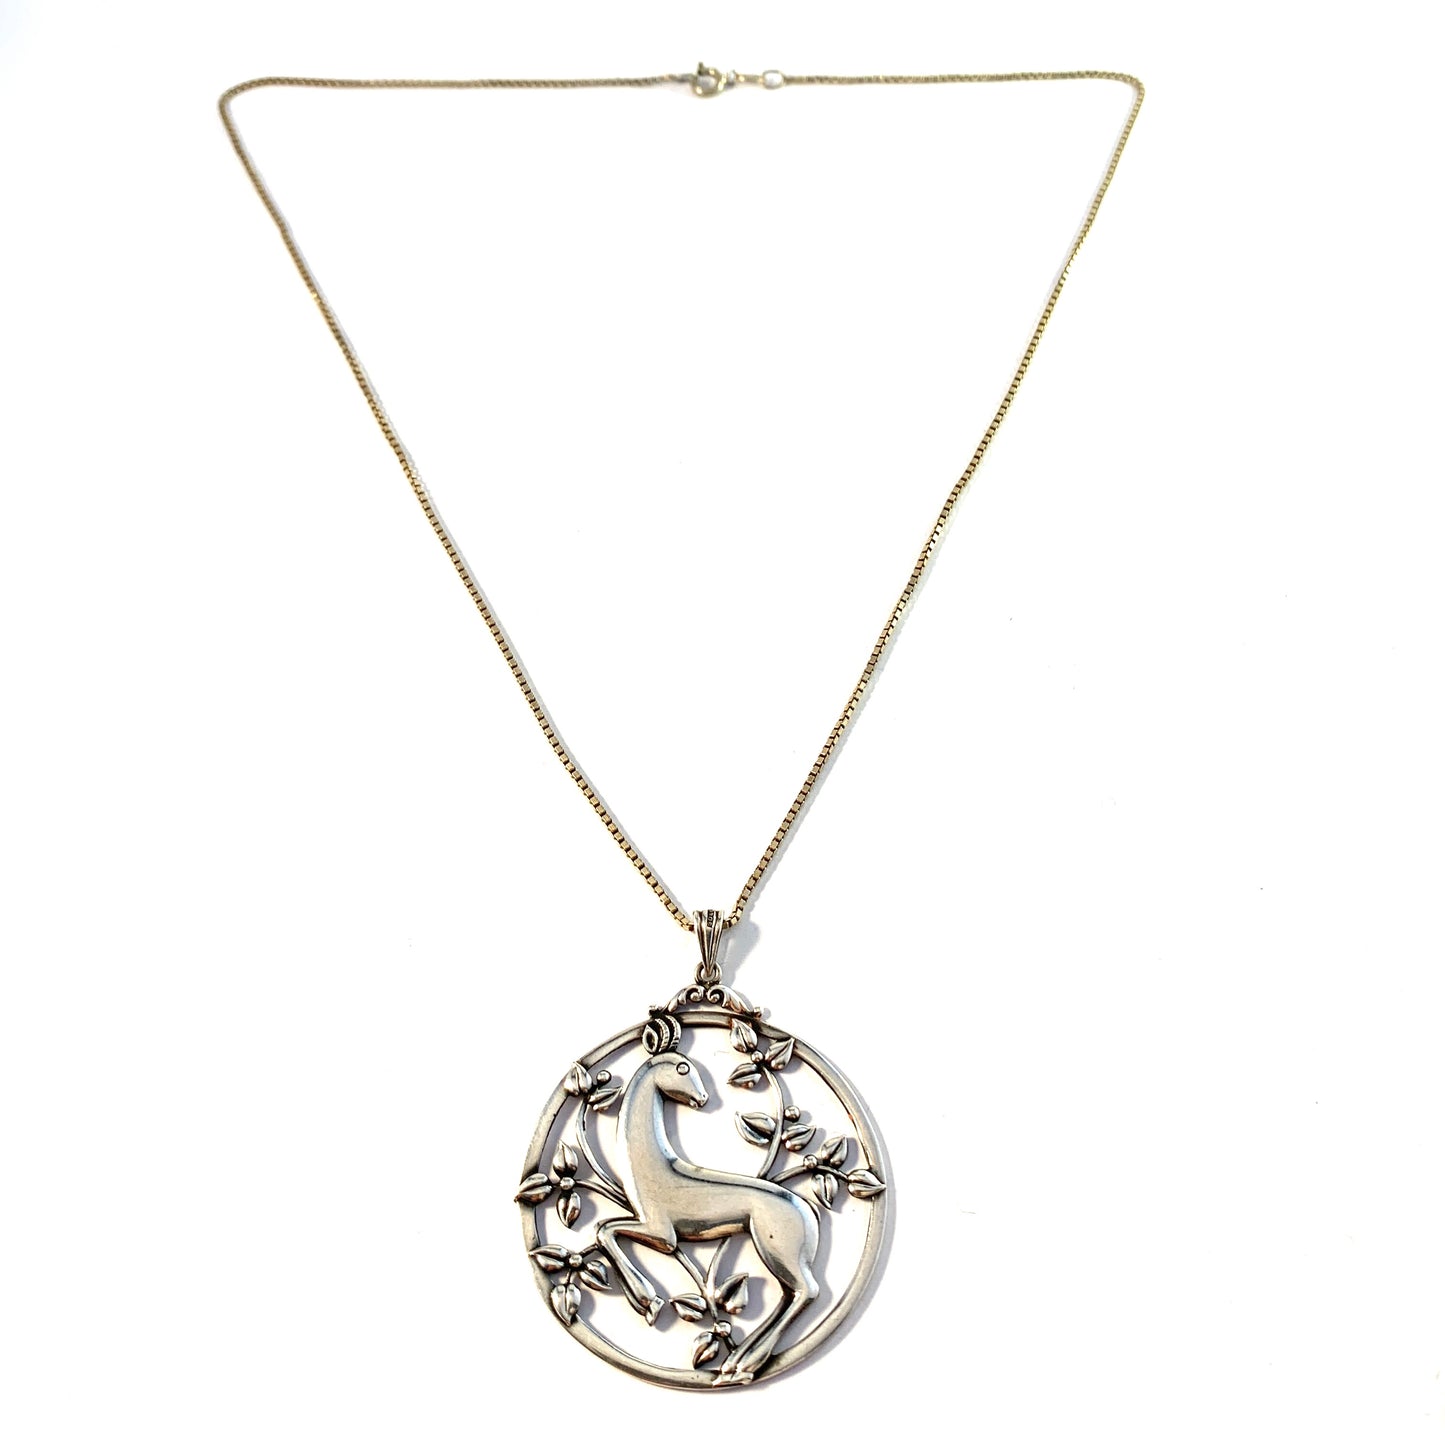 G Dahlgren, Sweden 1940s. Sterling Silver Pendant Necklace.